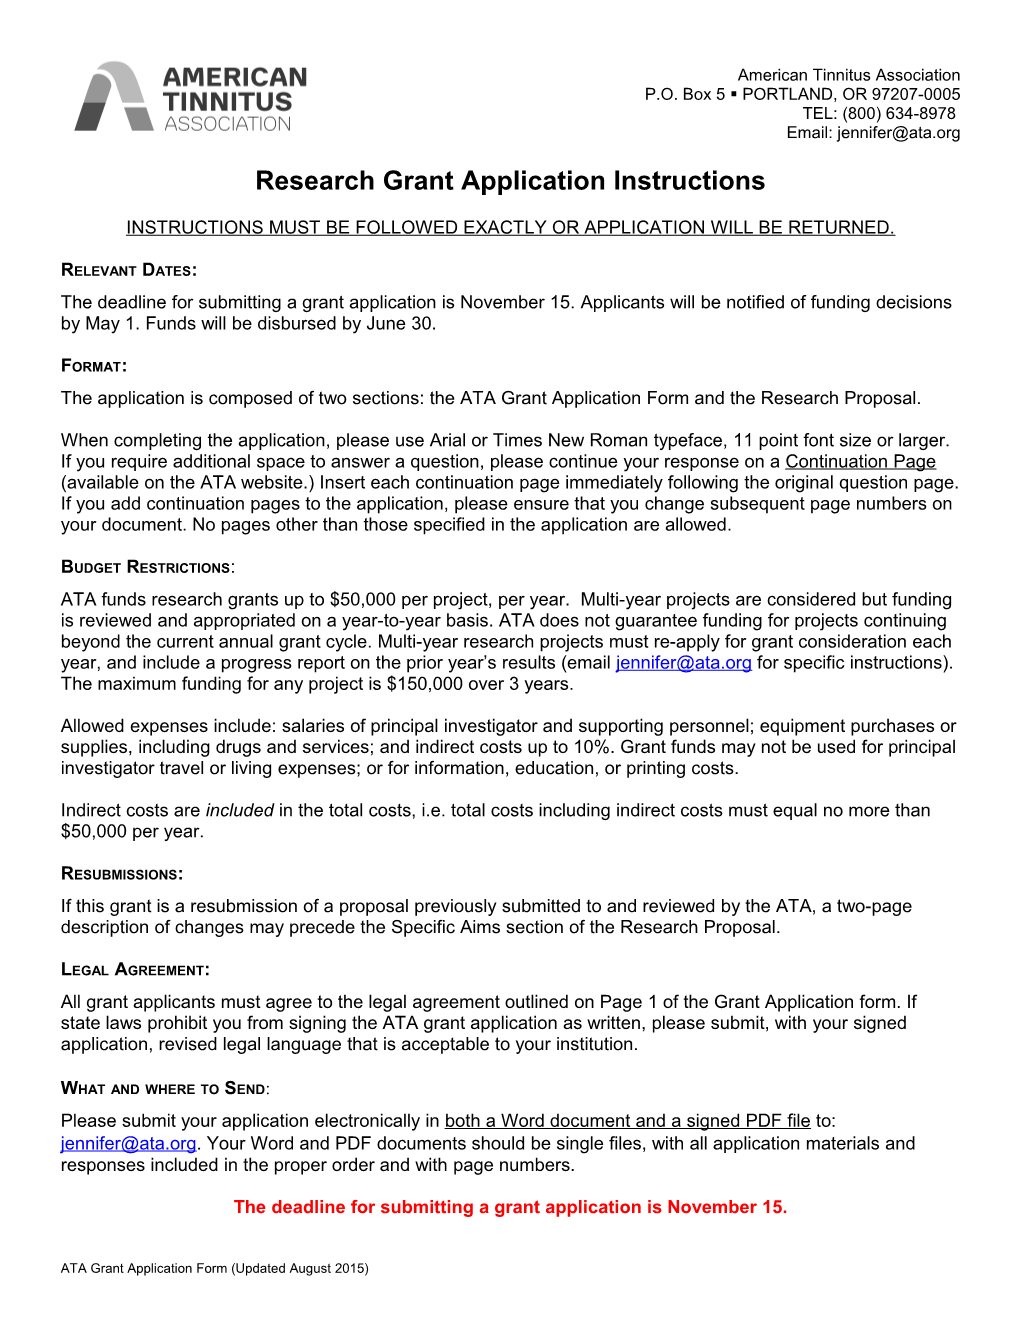 ATA Research Grant Application